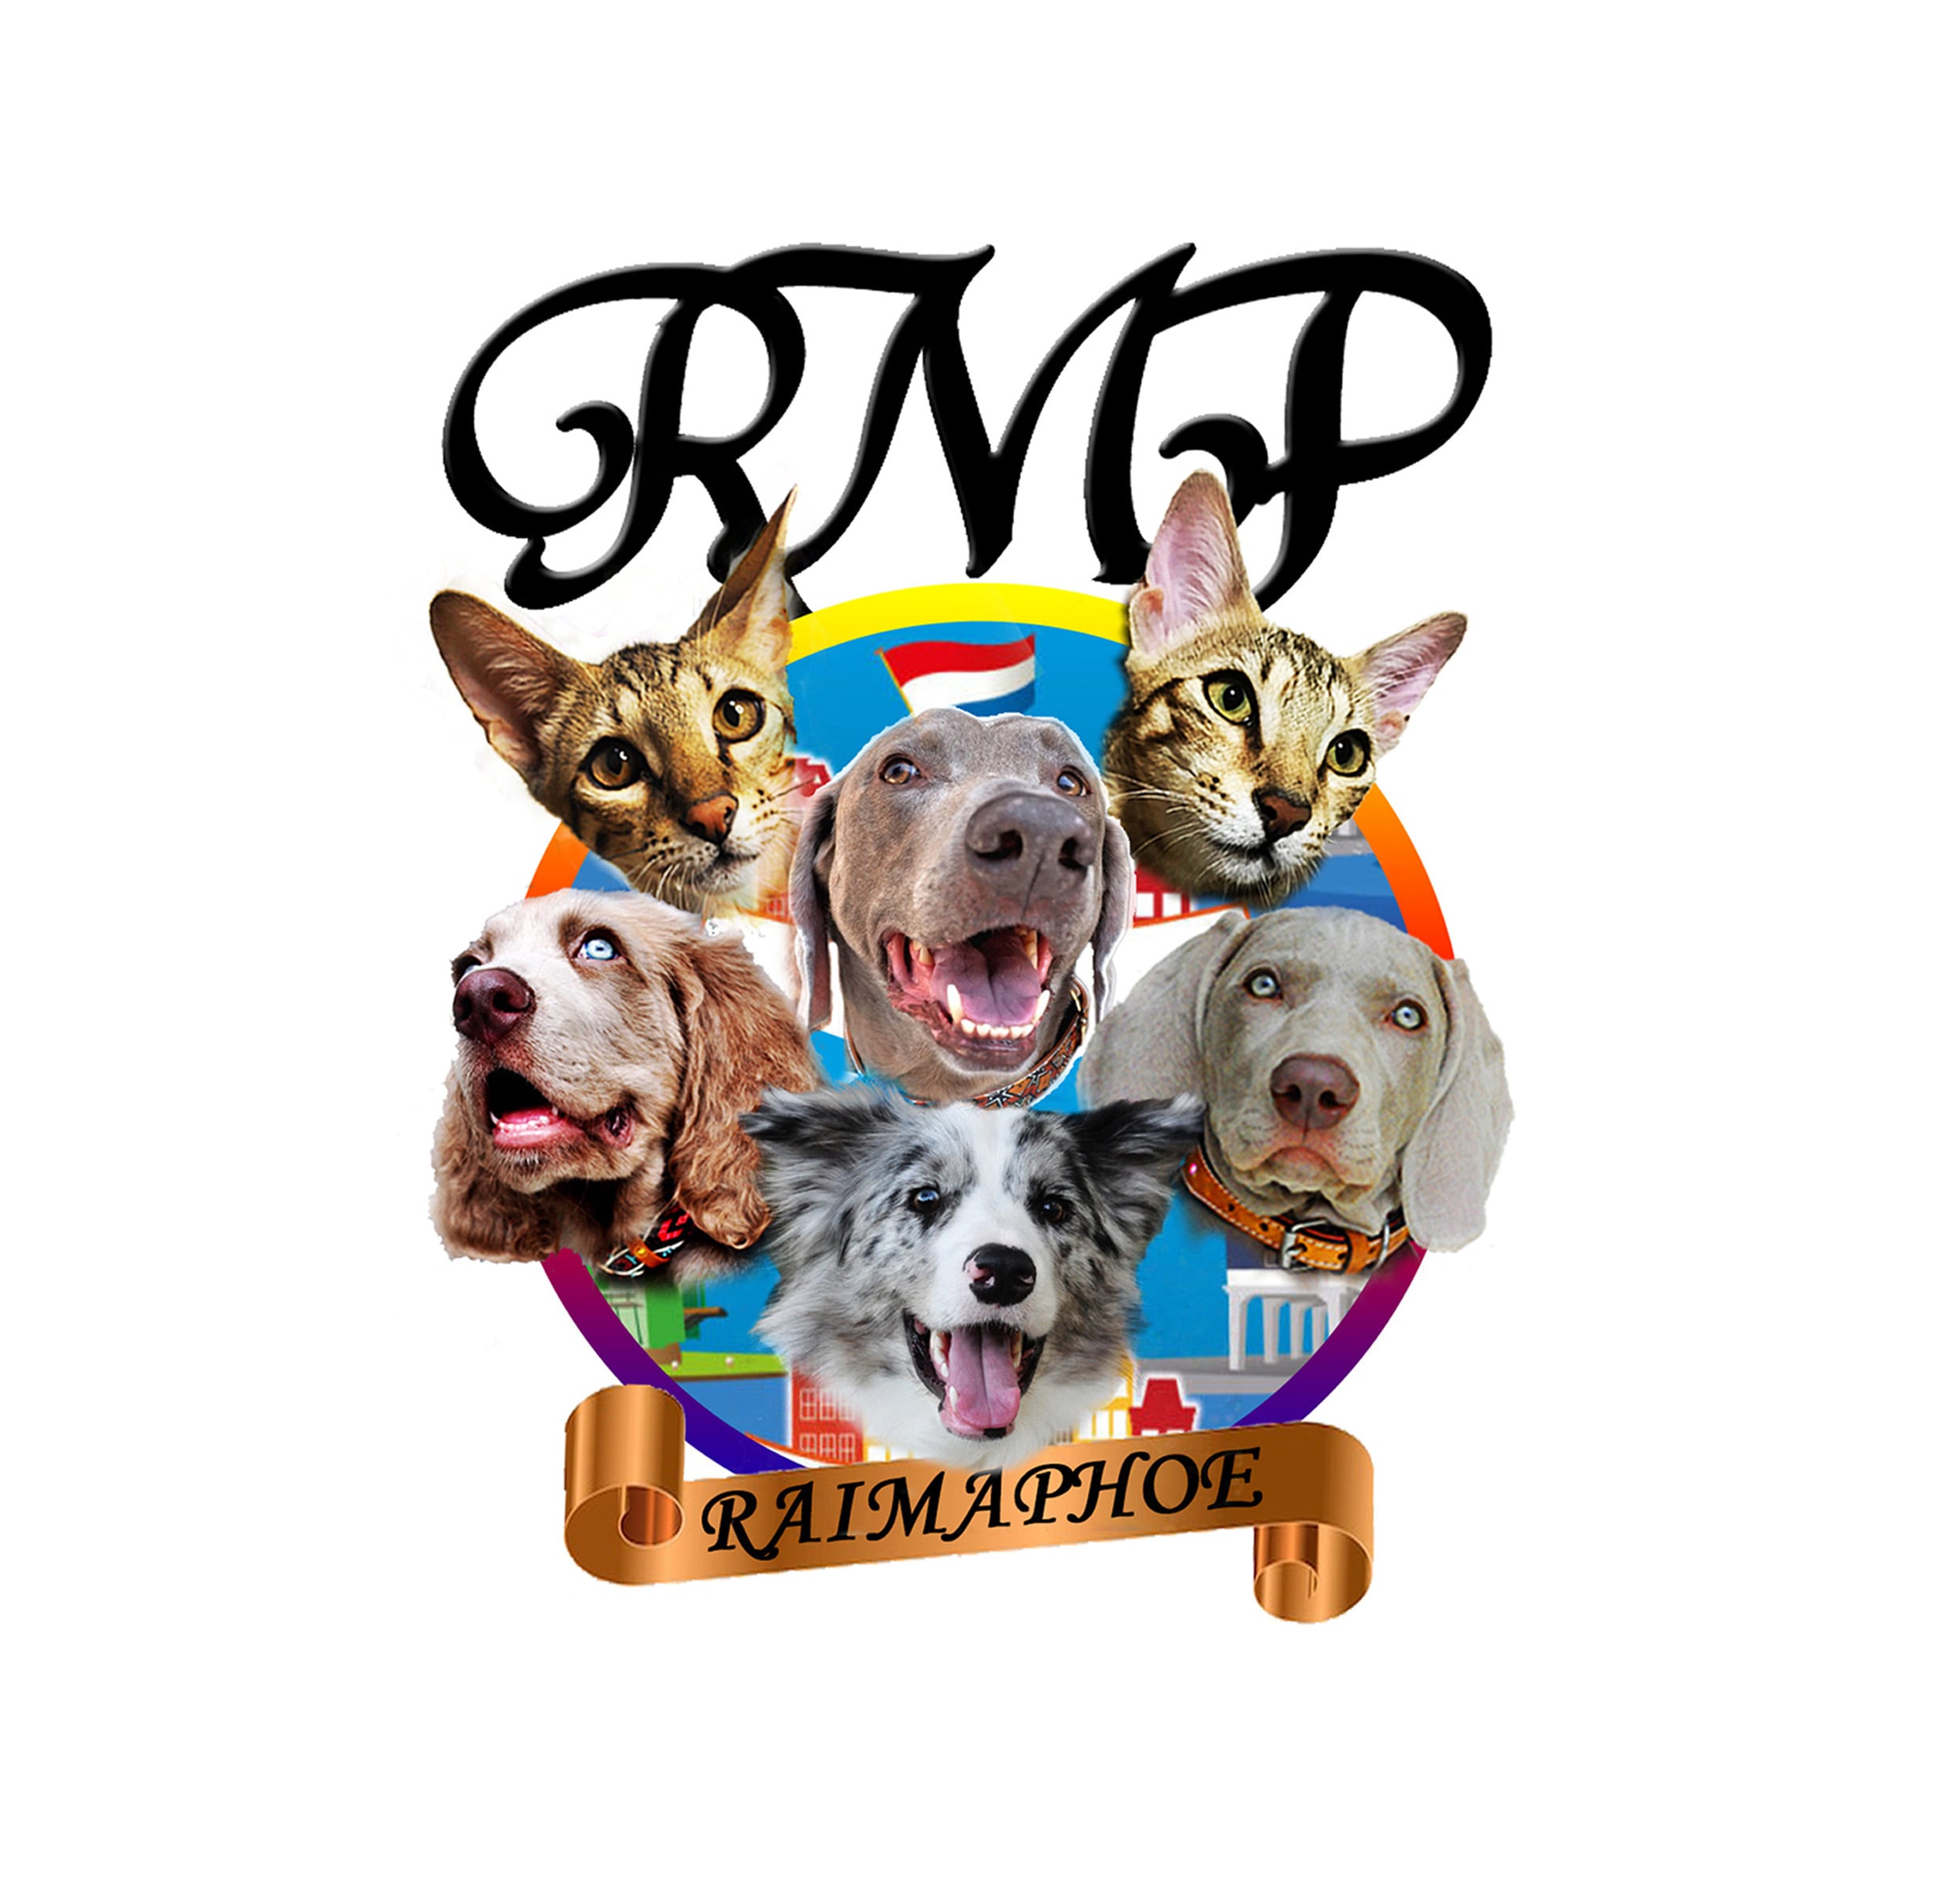 RAIMAPHOE DOGS & CATS　 ORGANIC SELECT SHOP